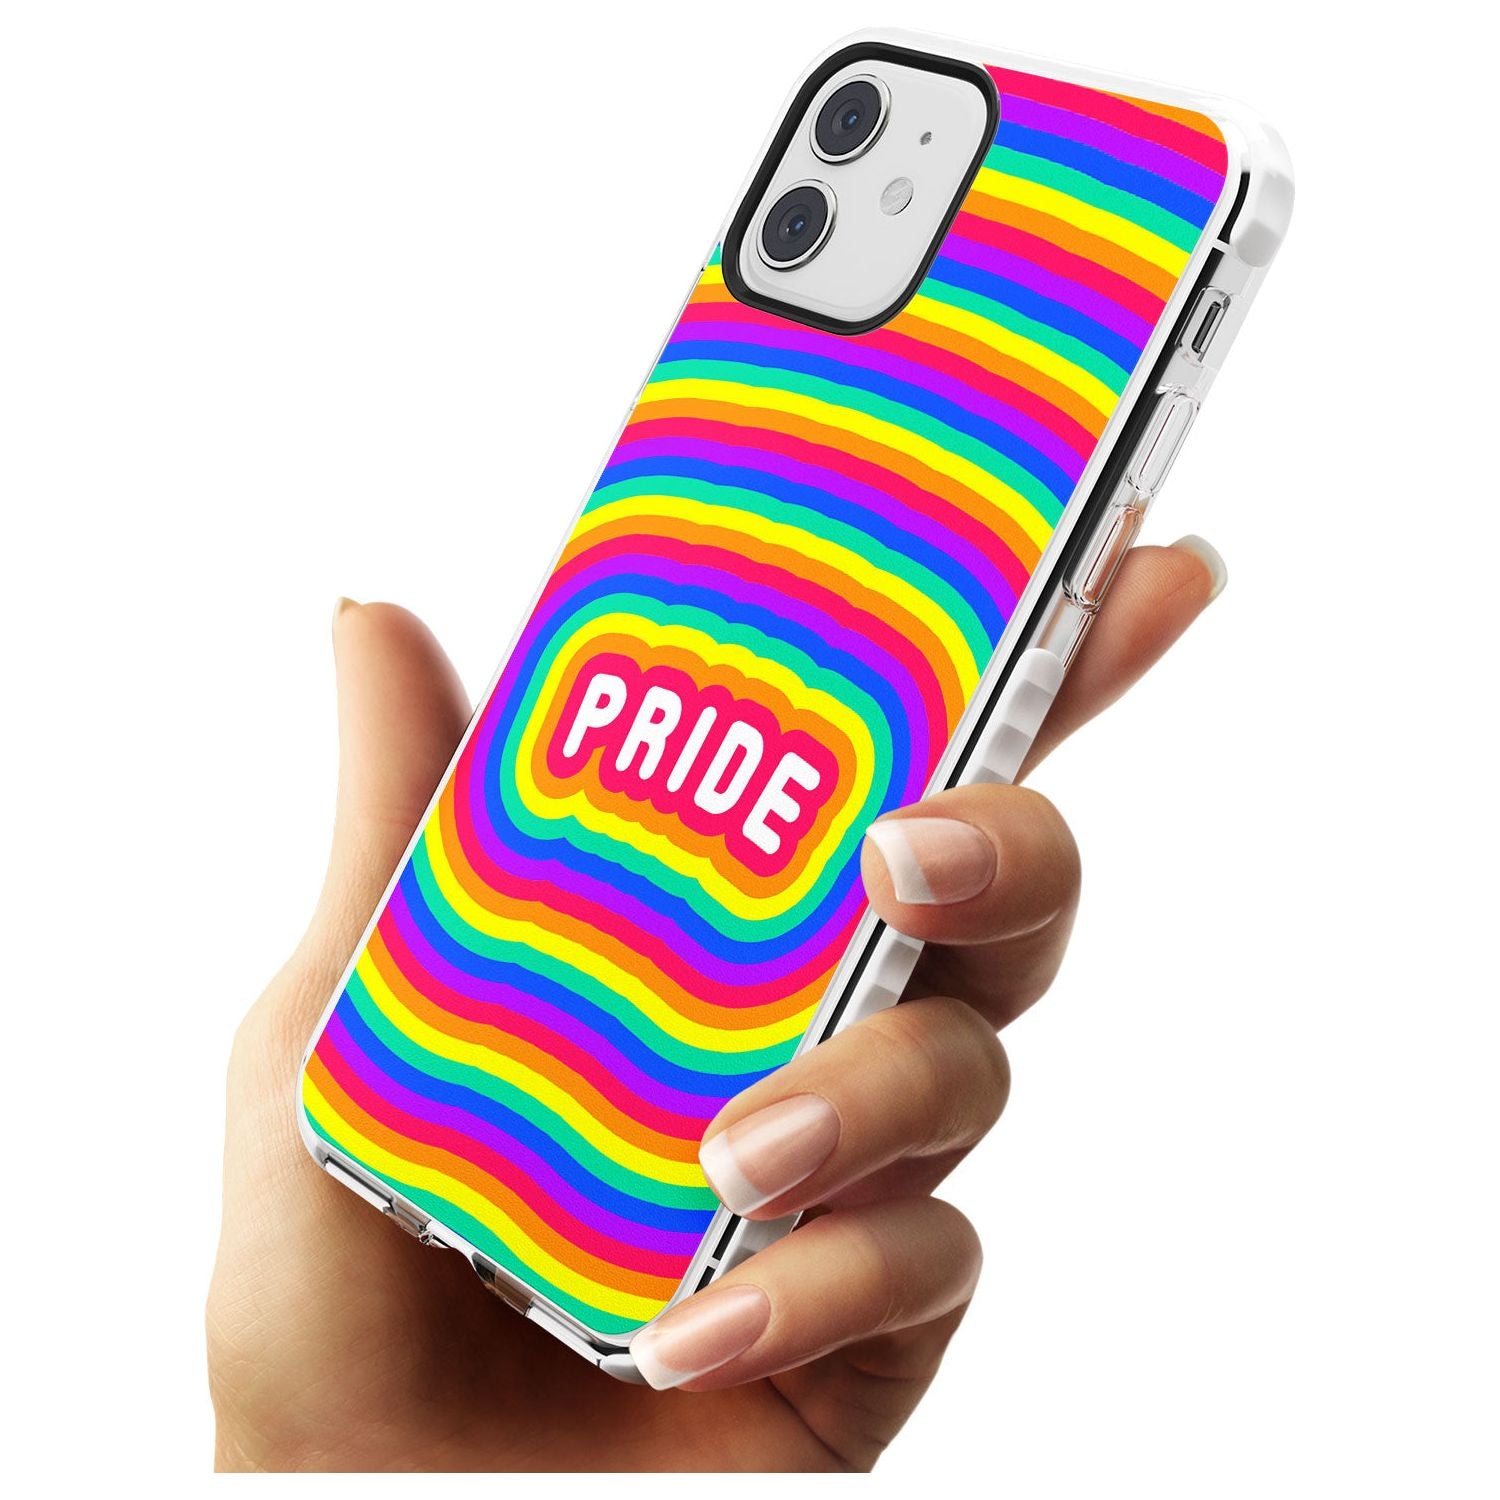 Pride Impact Phone Case for iPhone 11